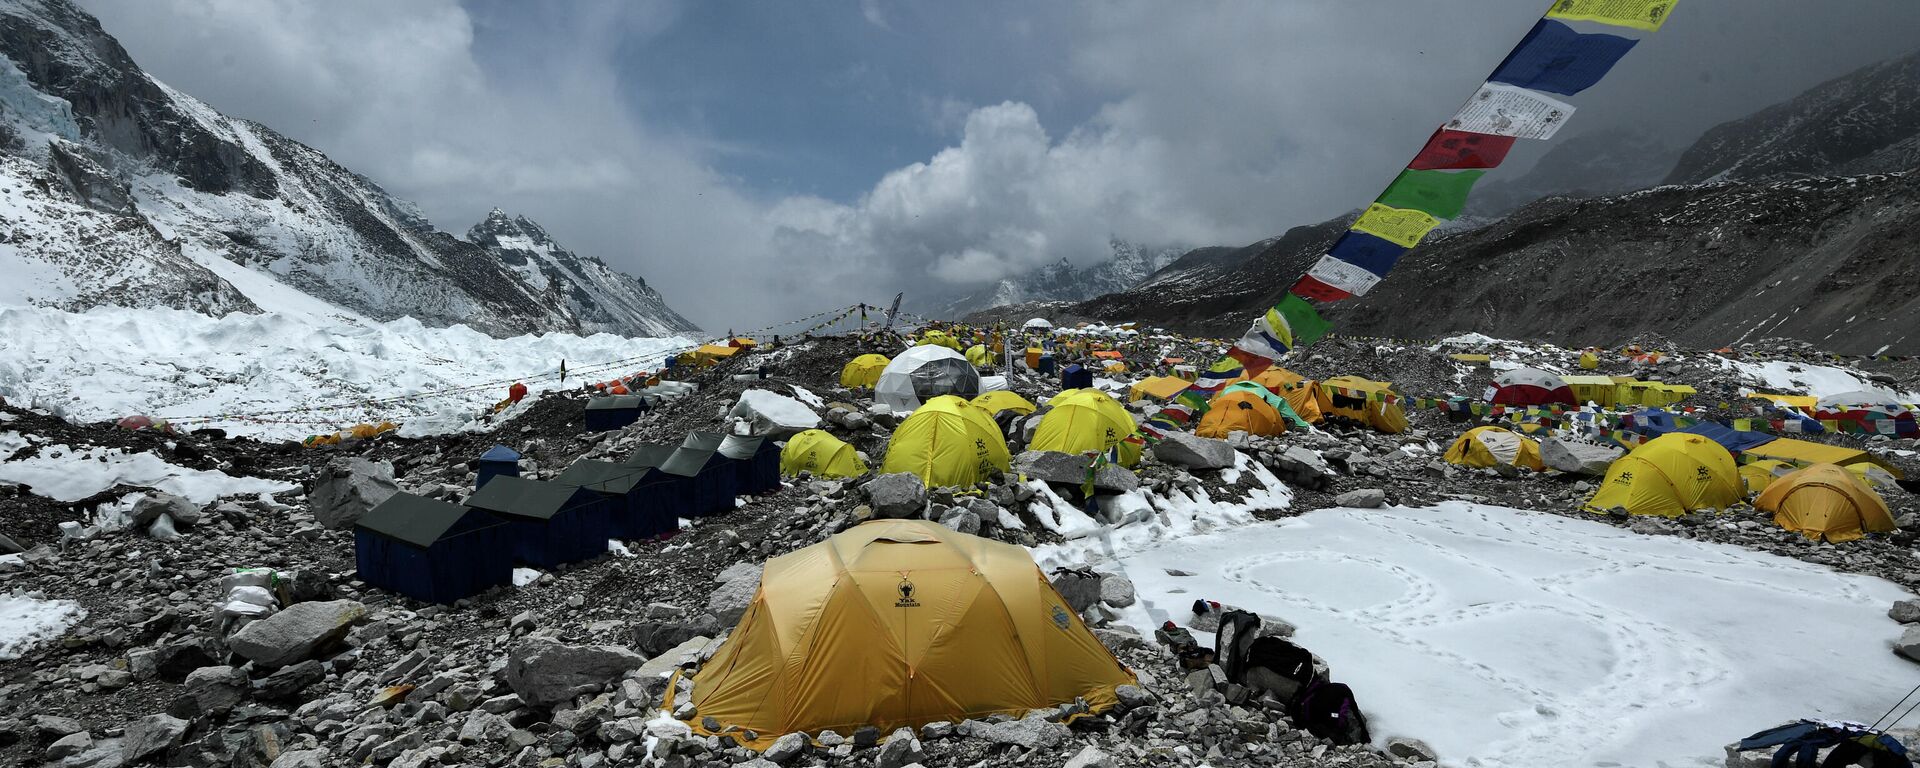 Campamento de ascenso al Everest - Sputnik Mundo, 1920, 05.05.2021